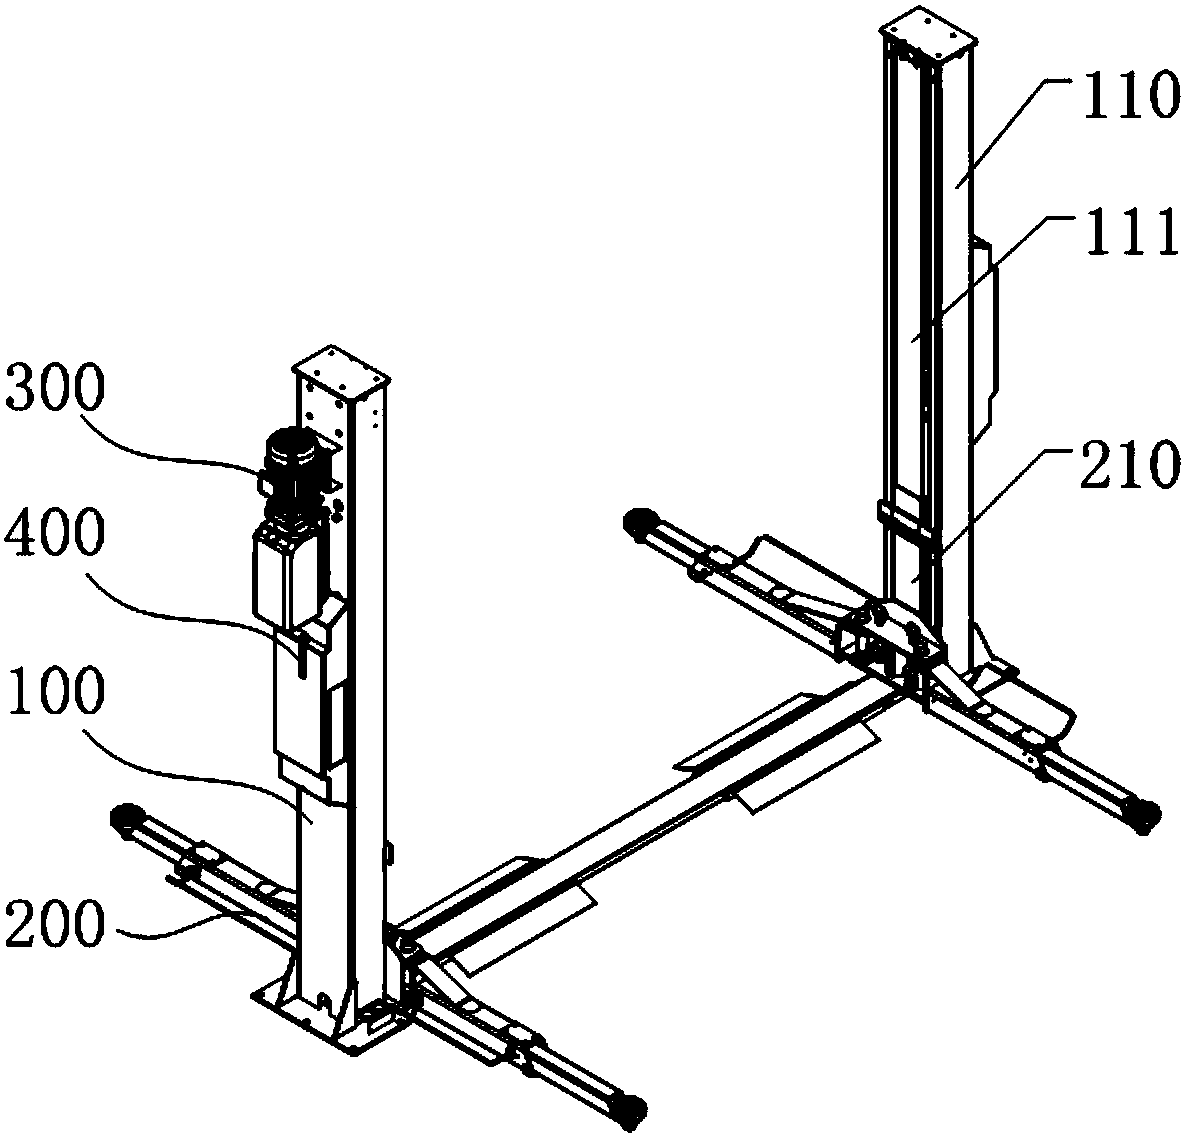 Vehicle lifting machine and double-column vehicle lifting machine